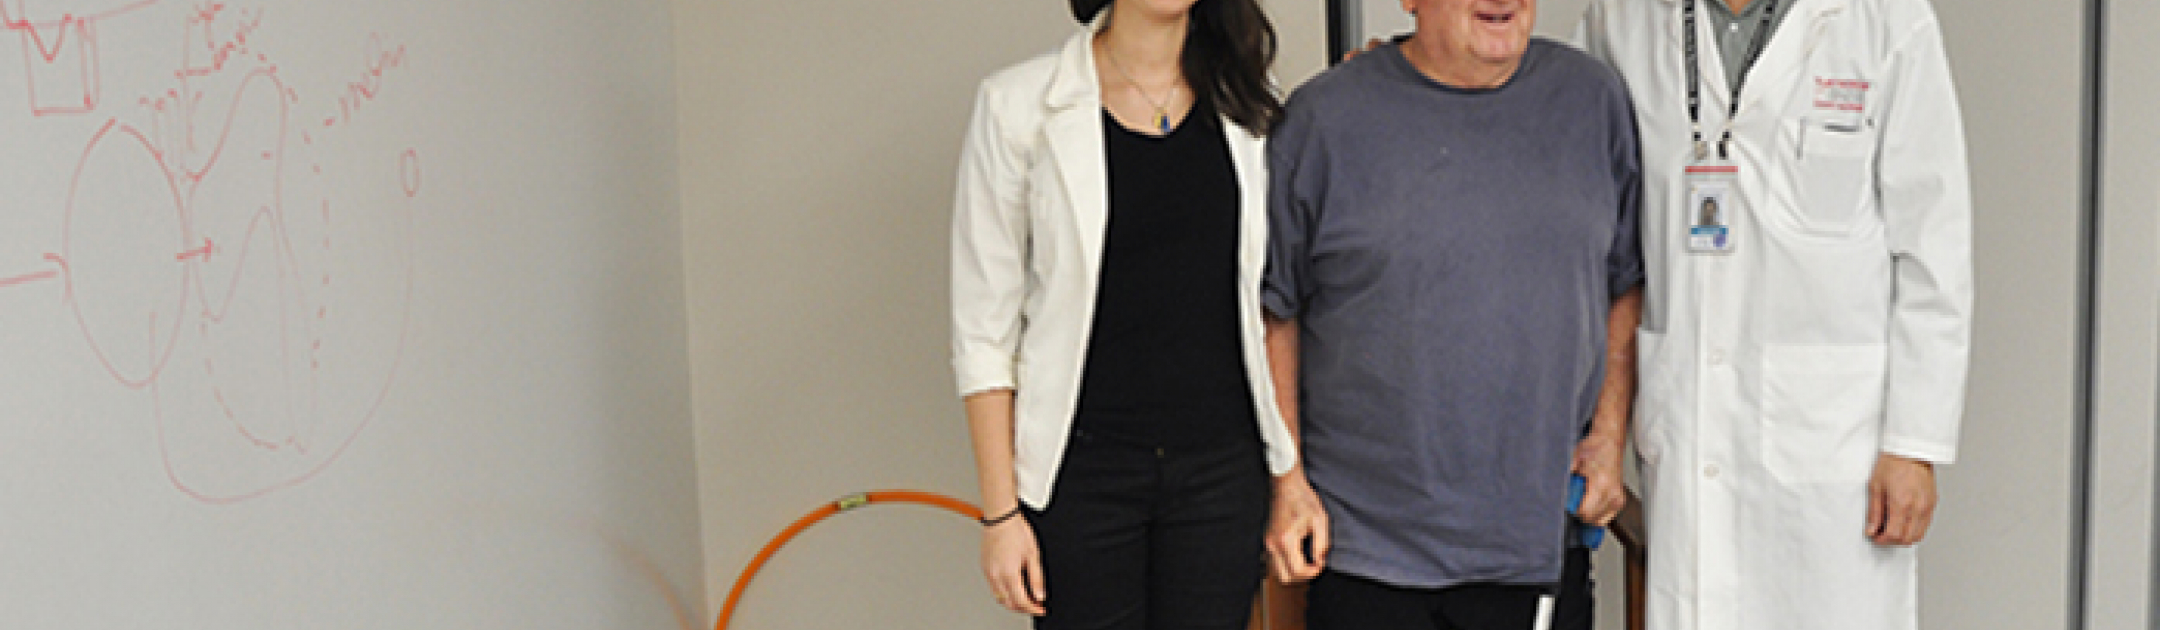 Olivia Samotus, PhD candidate; Larry Walleyn, research participant; and Dr. Mandar Jog